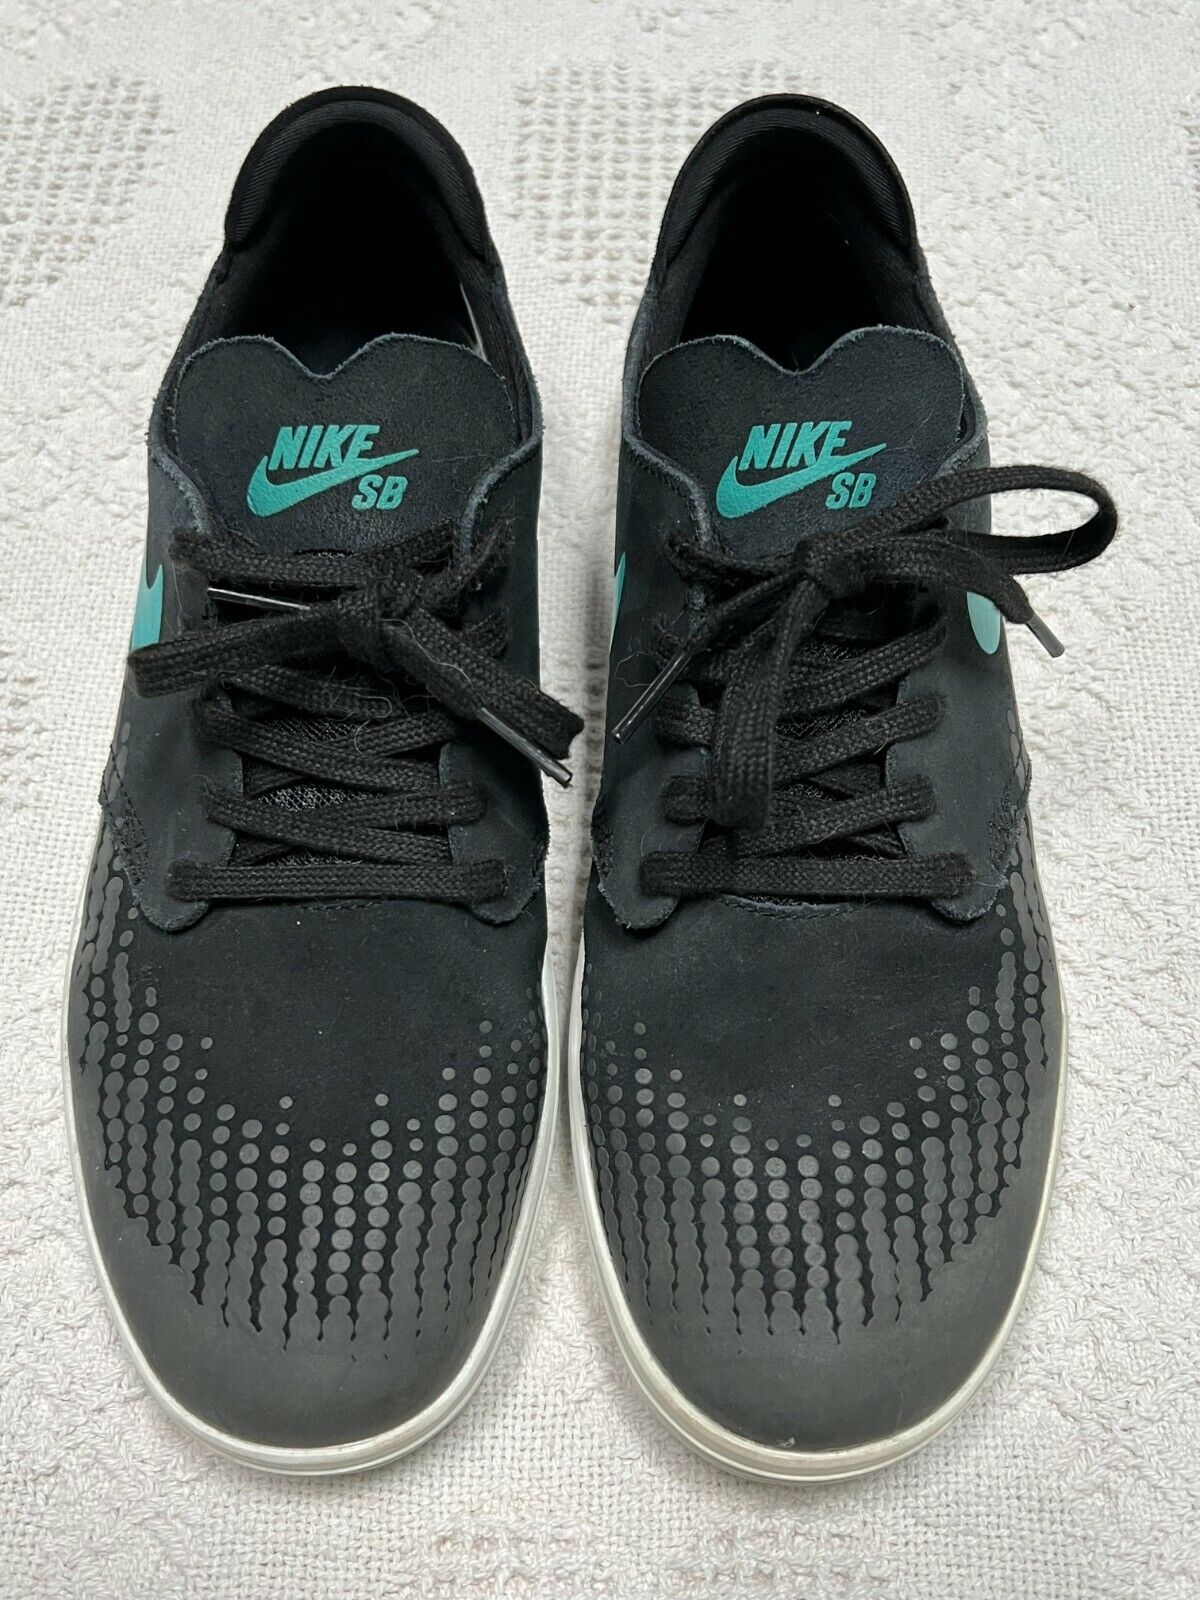 Nike SB LUNAR ONESHOT Shoes Black Jade Men&#039;s 8 LUNARLON | eBay